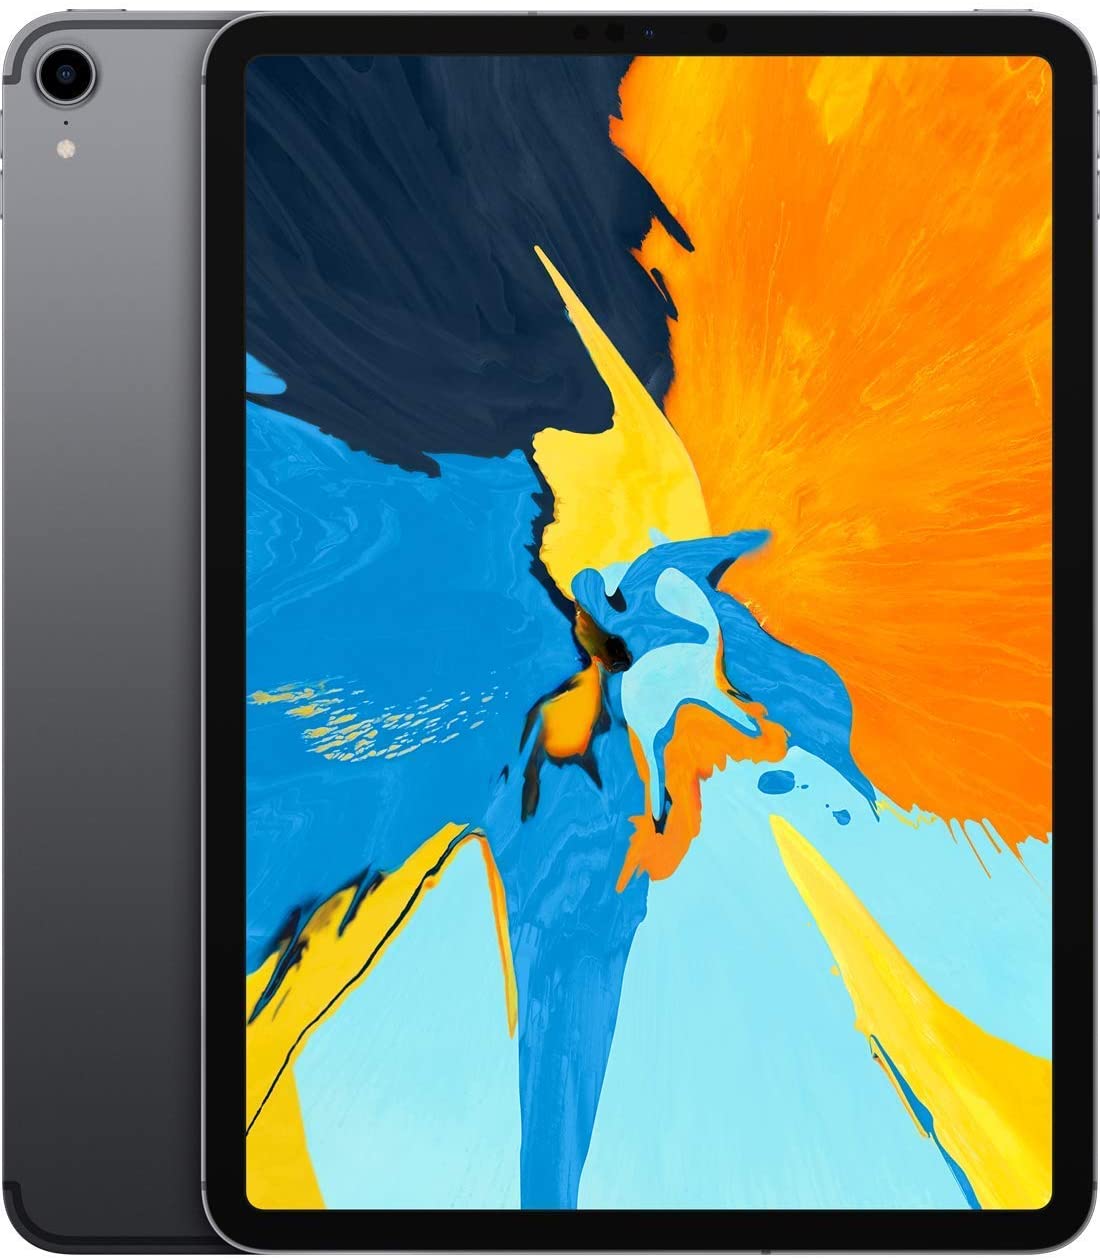 Apple iPad Pro 11-inch 1st Gen, 64GB, WIFI + Unlocked All Carriers - Space Gray (Certified Refurbished)